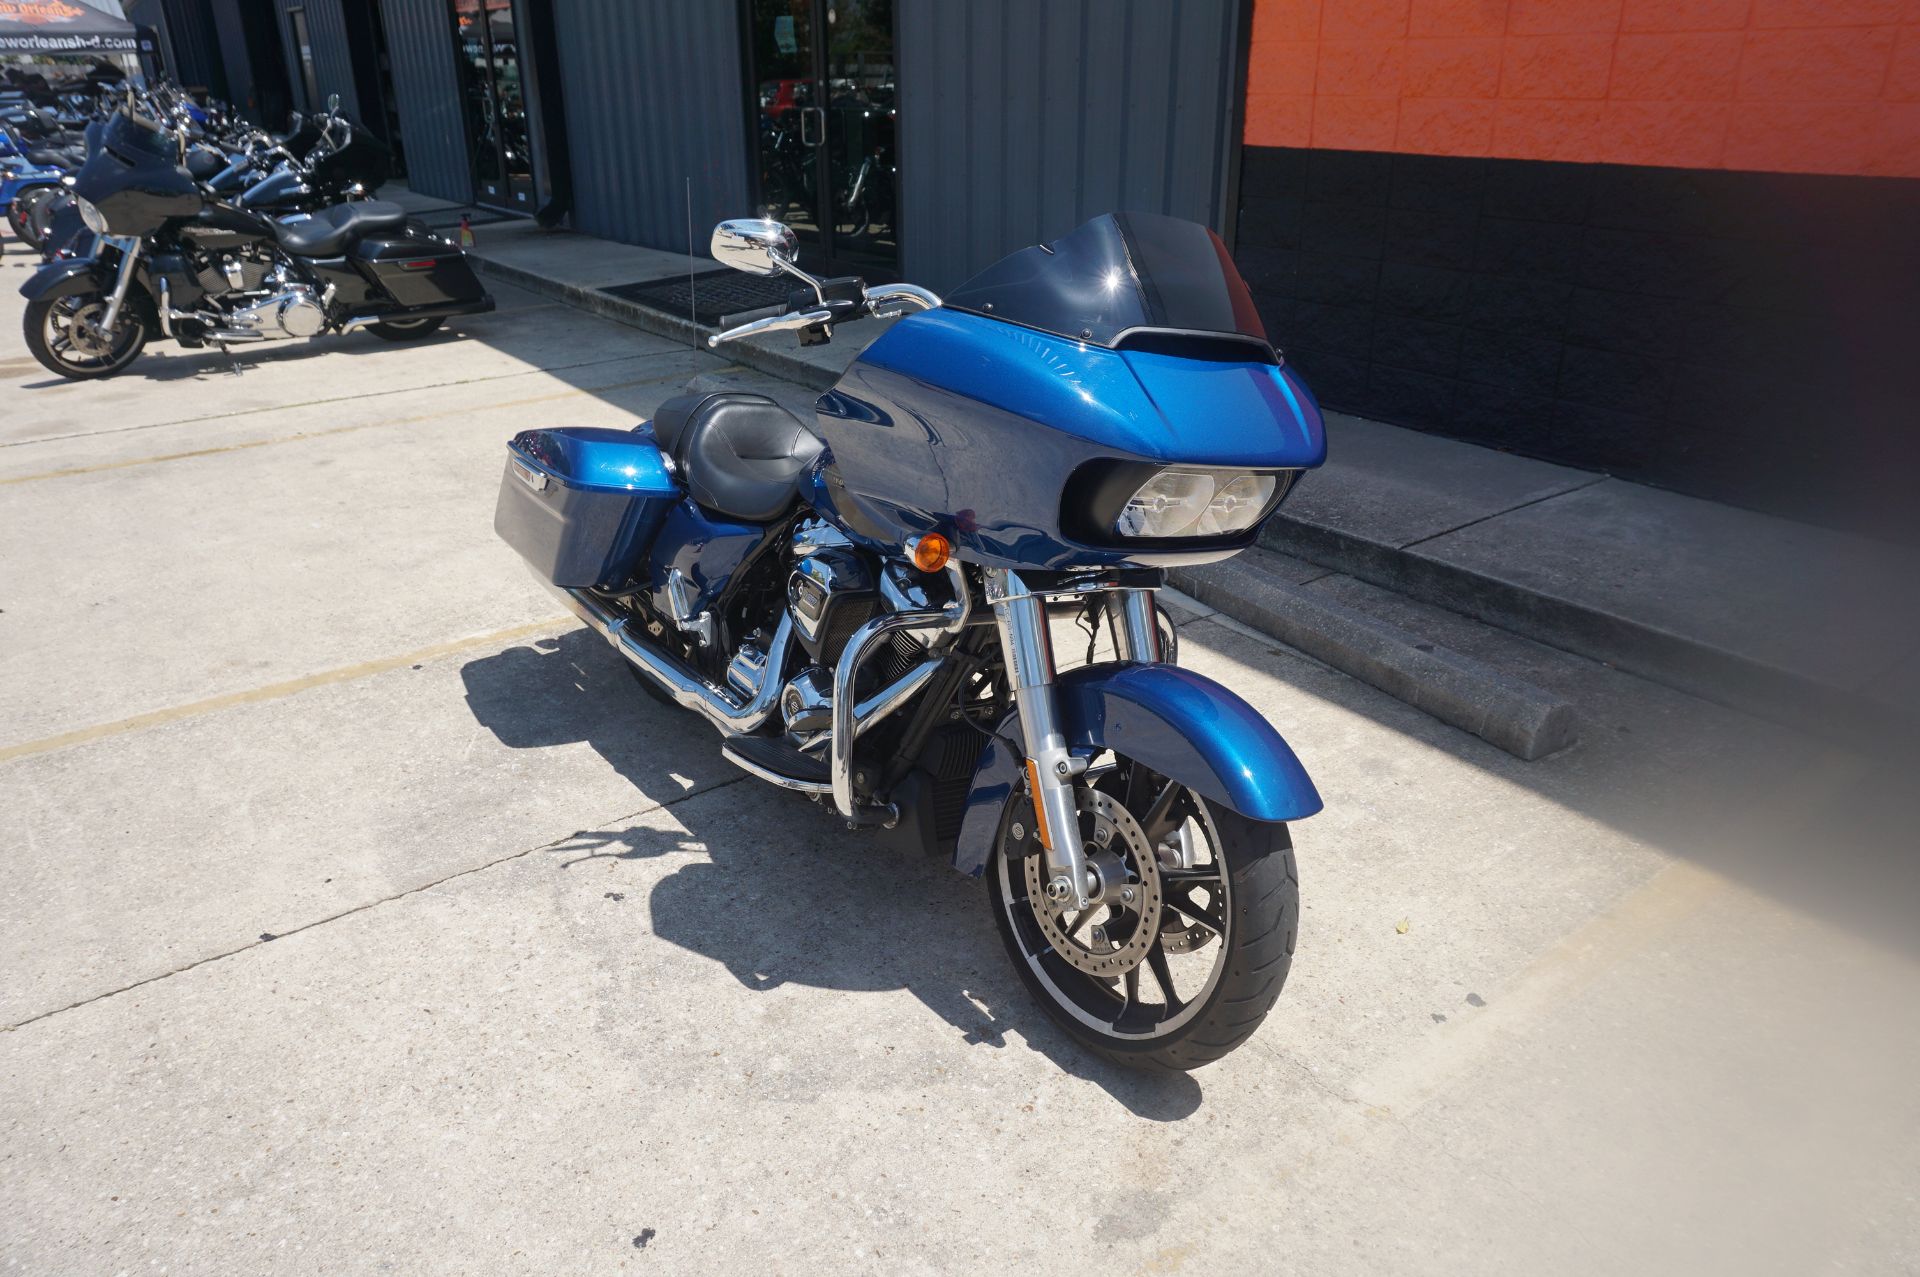 2022 Harley-Davidson Road Glide® in Metairie, Louisiana - Photo 16